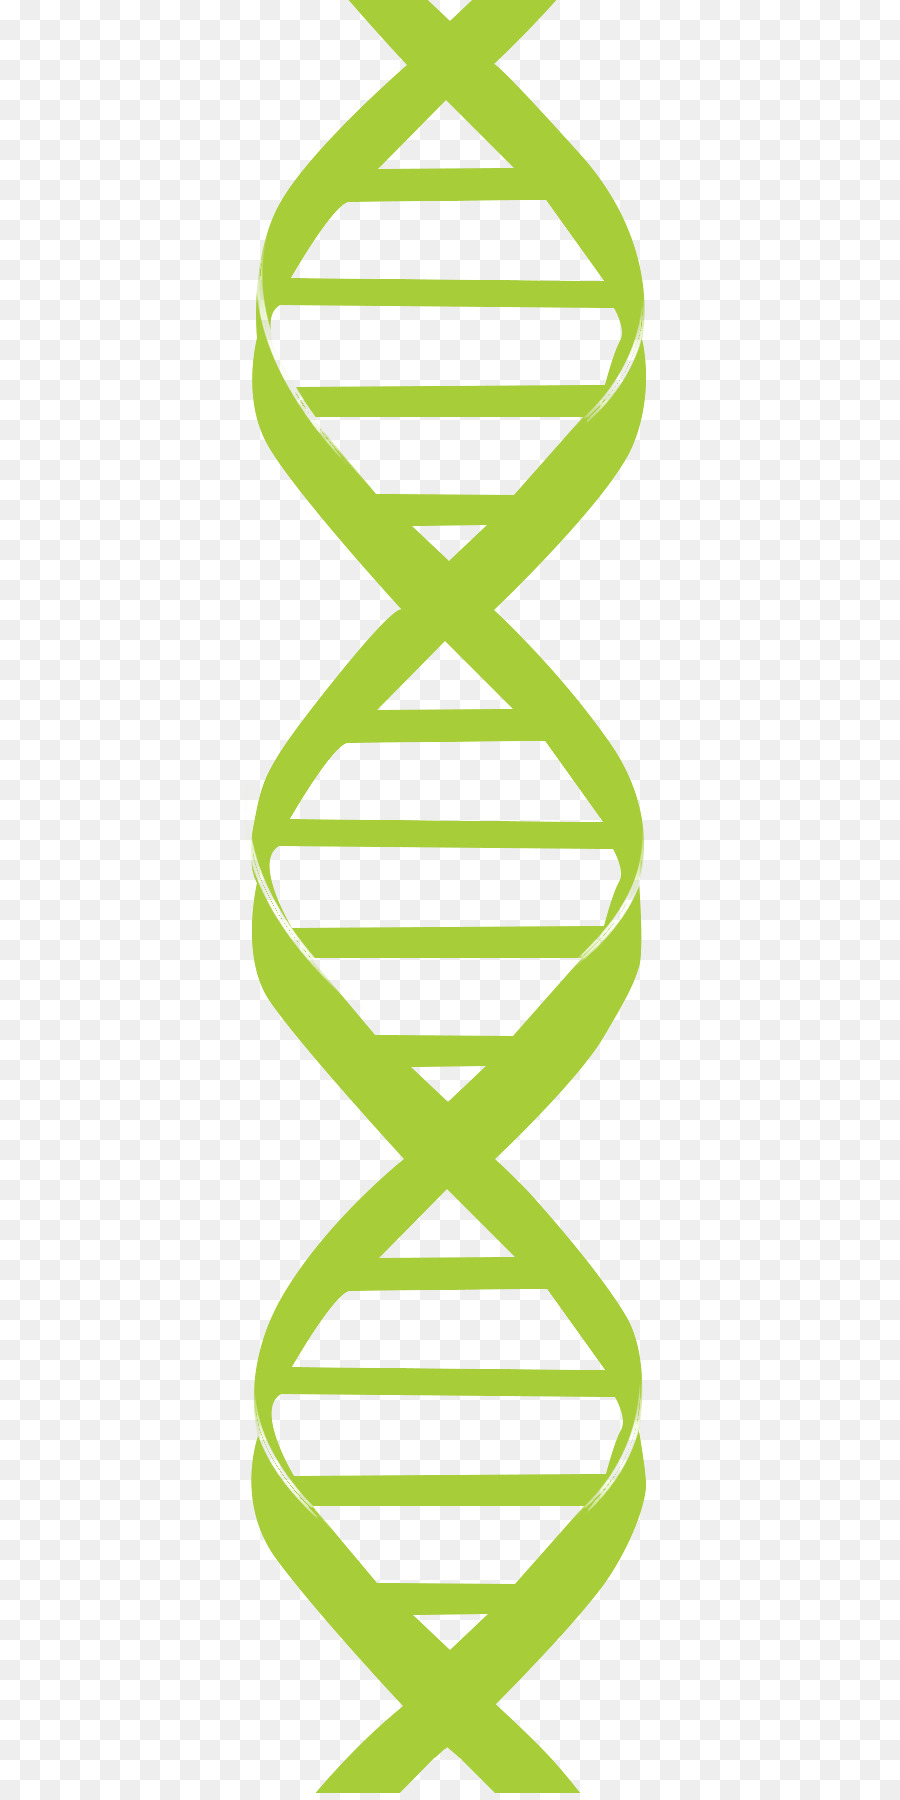 Clip art Nucleic acid double helix DNA Genetics - dna strand png download - 411*1793 - Free Transparent Nucleic Acid Double Helix png Download.